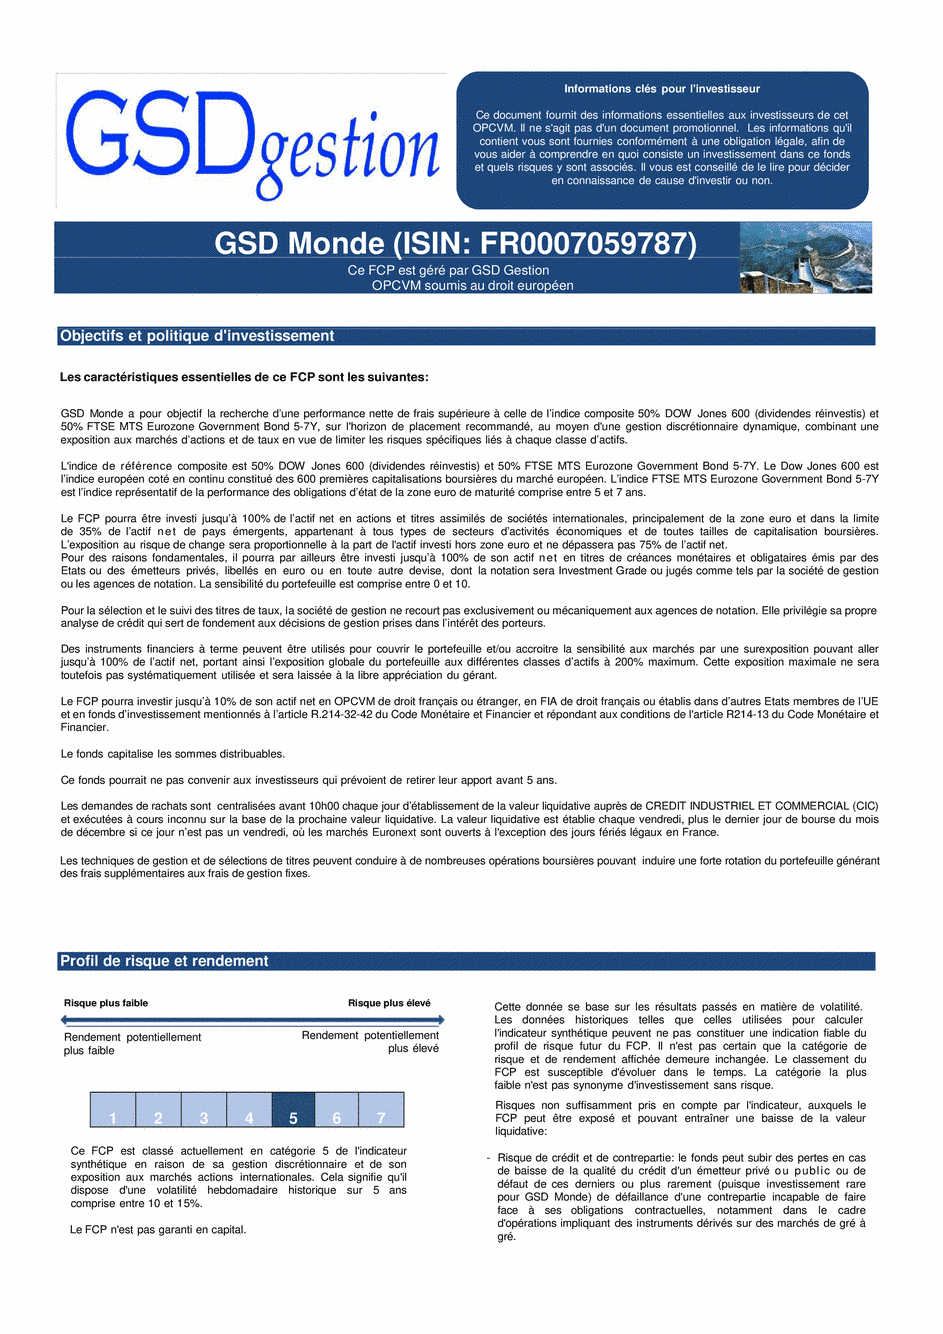 DICI-Prospectus GSD Monde - 21/11/2018 - Français